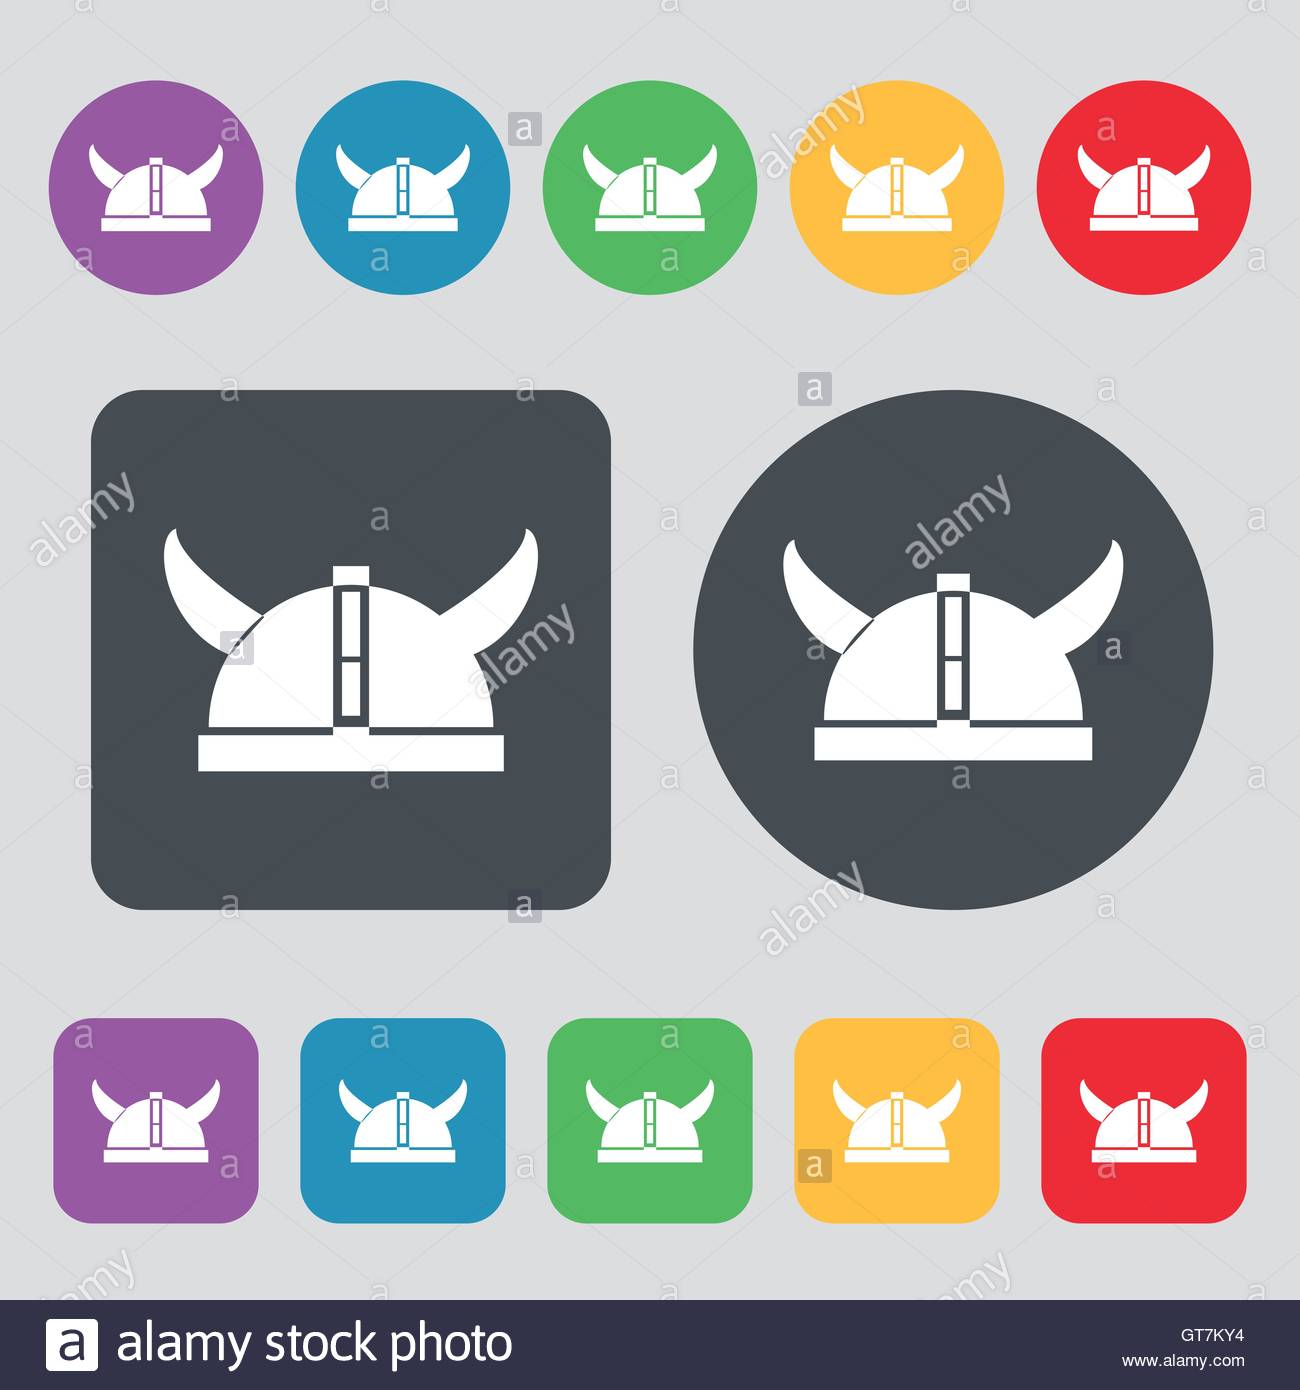 Viking-helmet icons | Noun Project